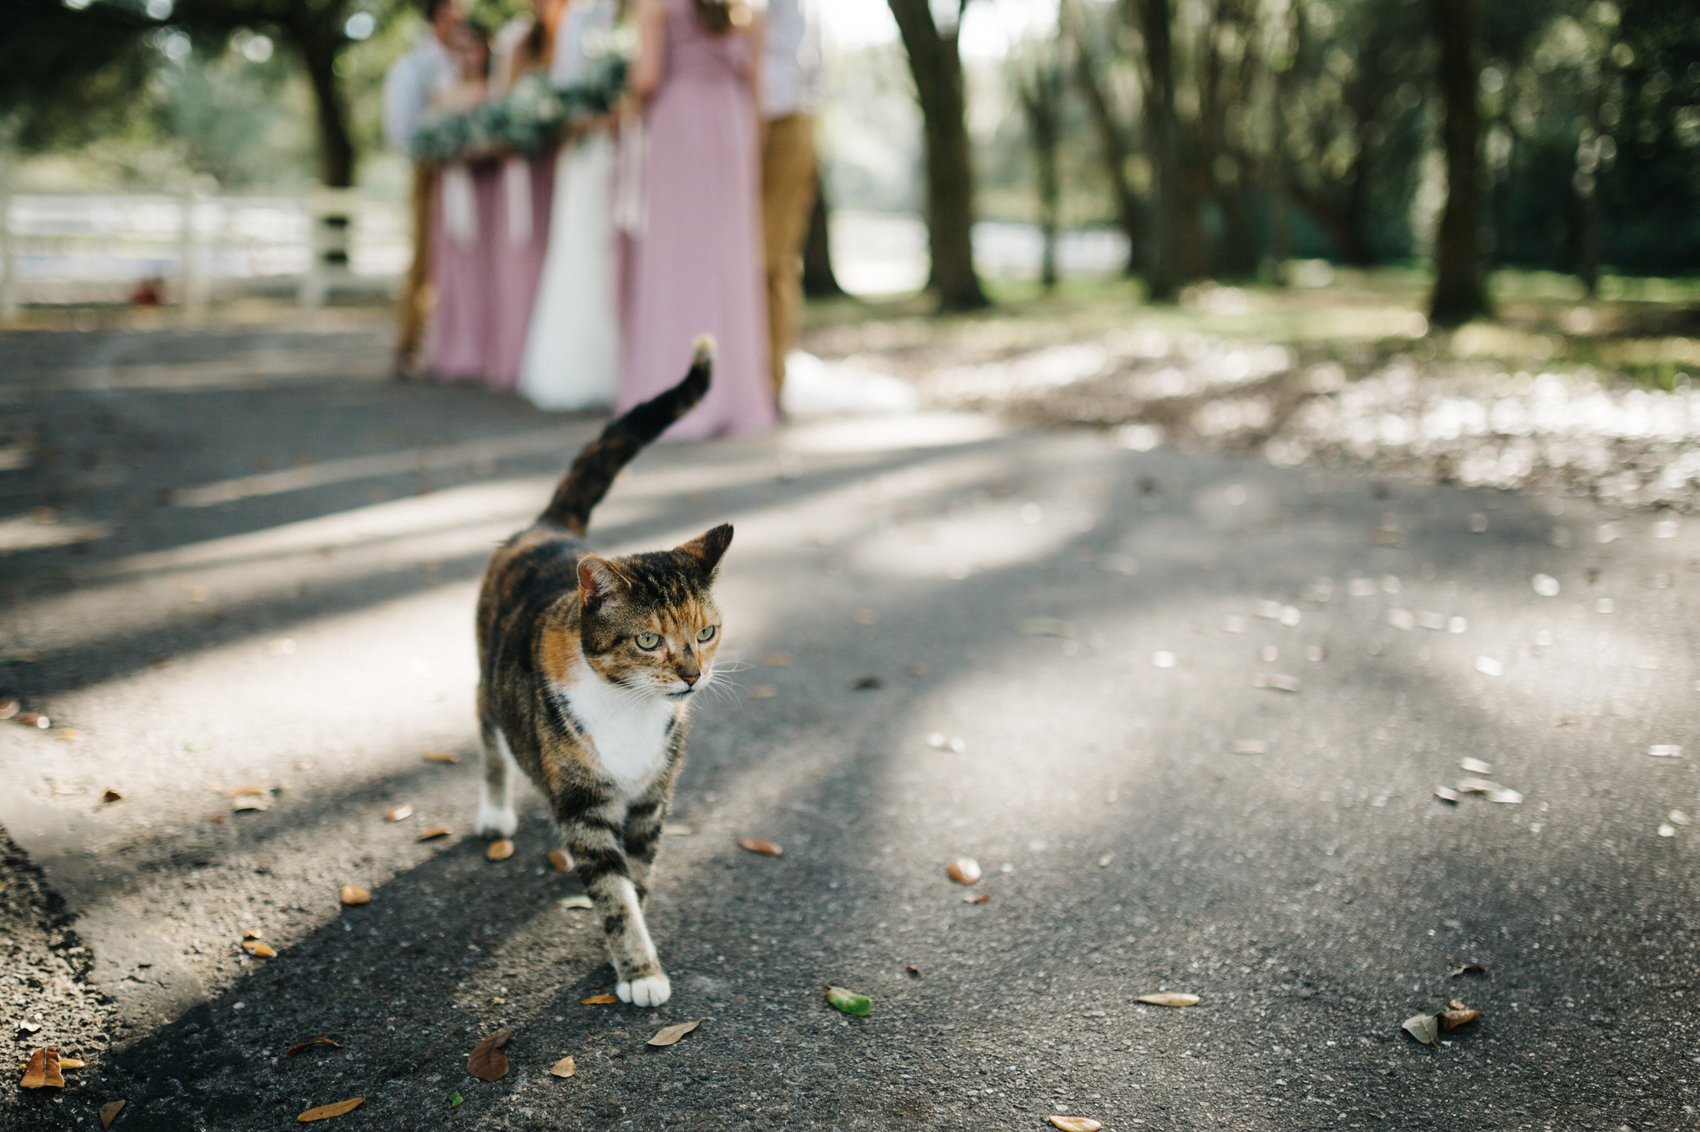 cat photobomb during bridal party photos